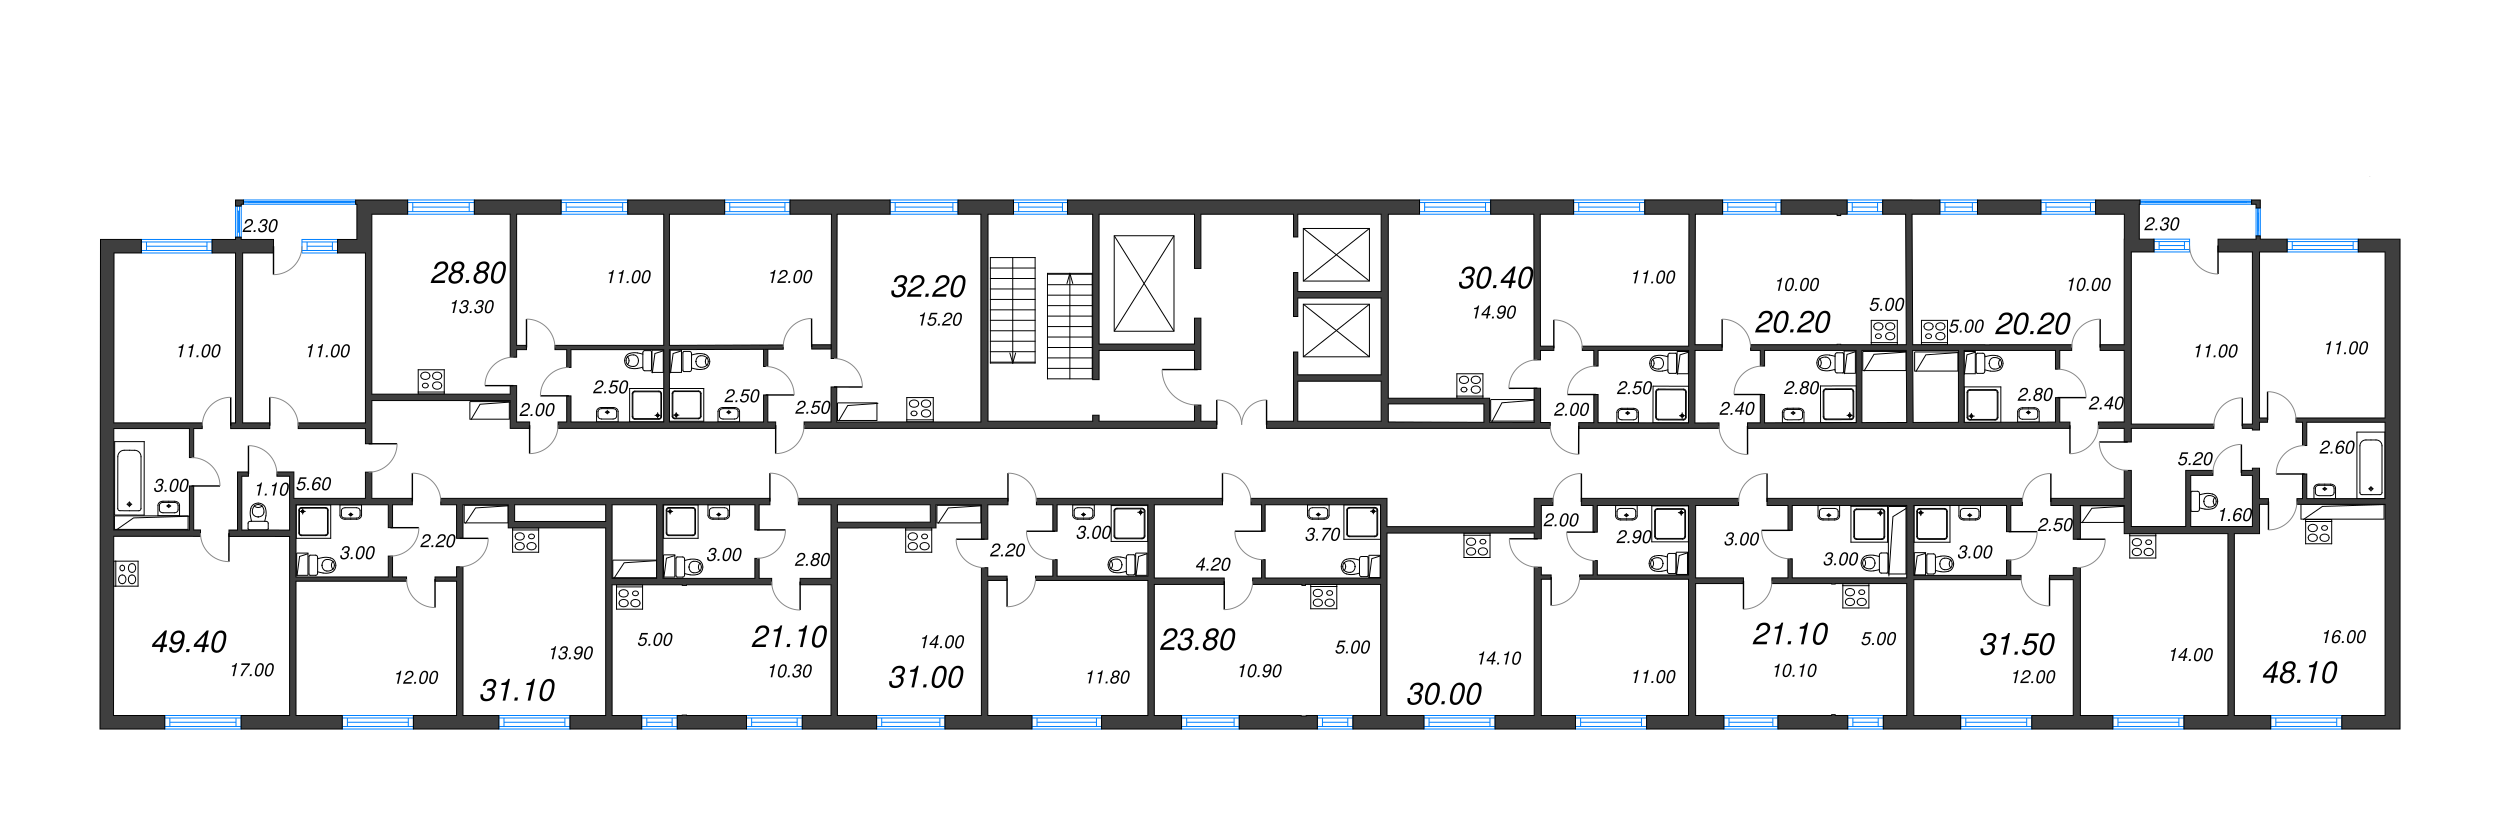 2-комнатная (Евро) квартира, 32.2 м² - планировка этажа